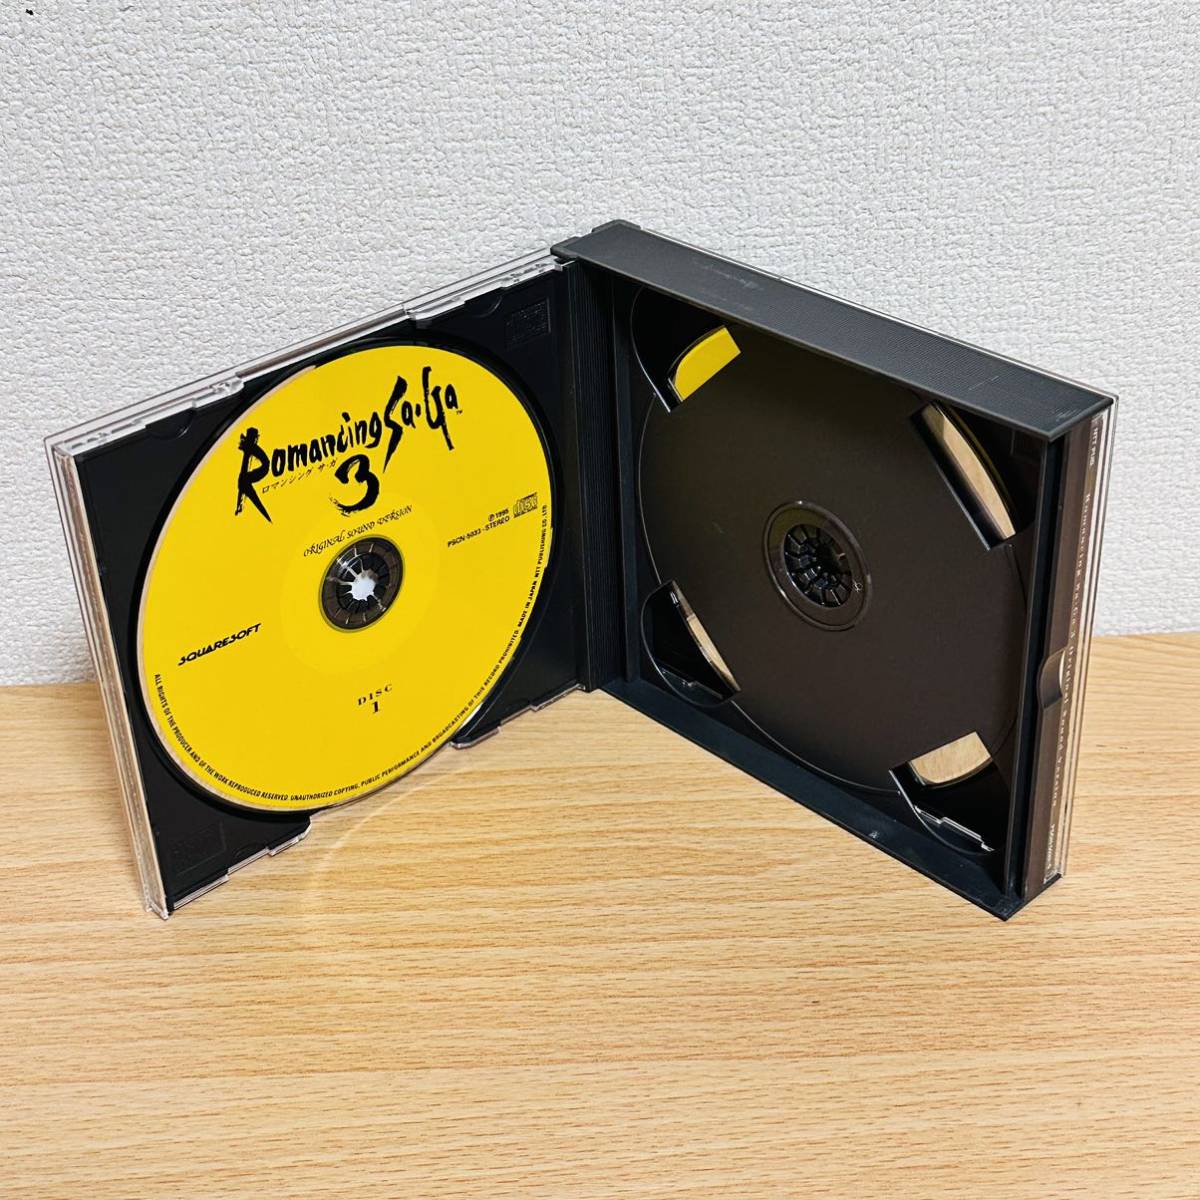 CD 美品 帯付き 3枚組 ロマンシングサガ3 オリジナルサウンドバージョン ヴァージョン ロマサガ3 サウンドトラック_画像3